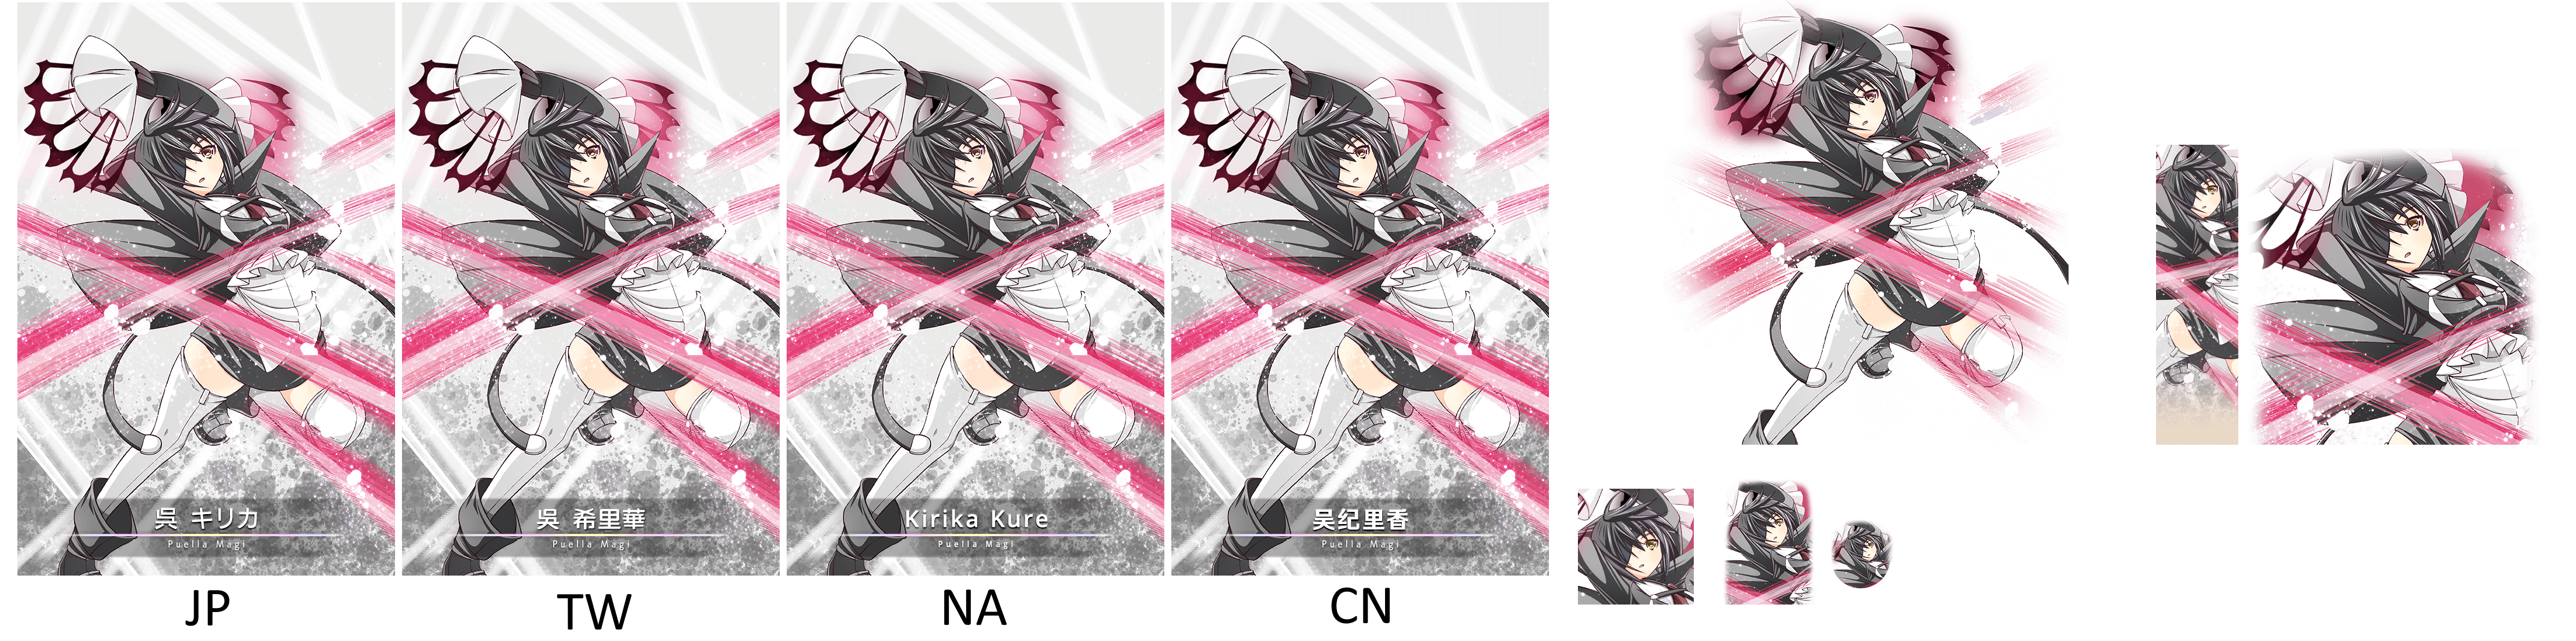 Kirika Kure [card_40025]